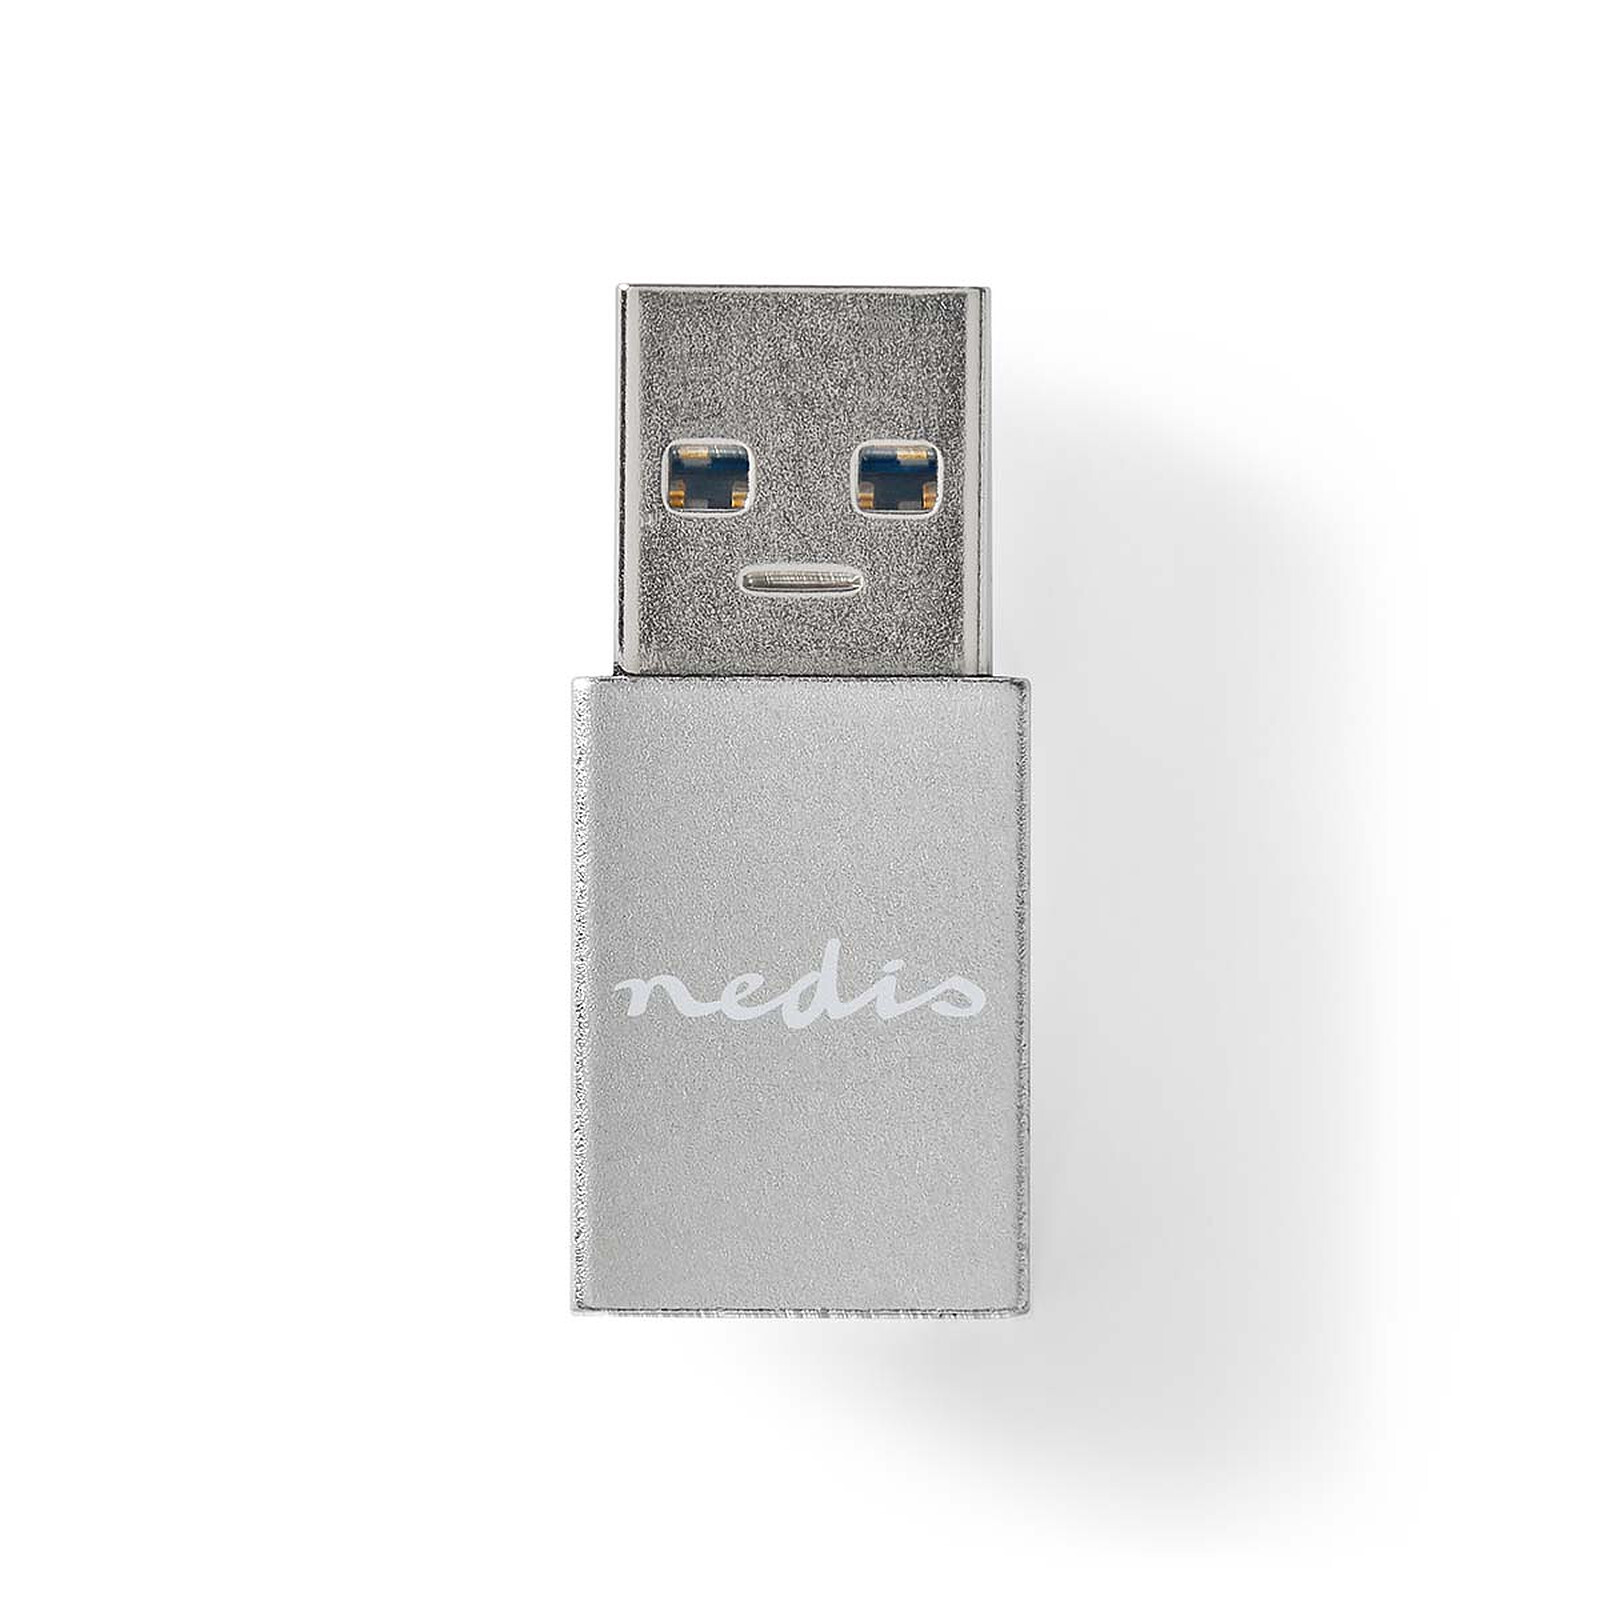 Adaptateur en câble USB-C 3.1 mâle / USB 3.0 A femelle - USB - Garantie 3  ans LDLC